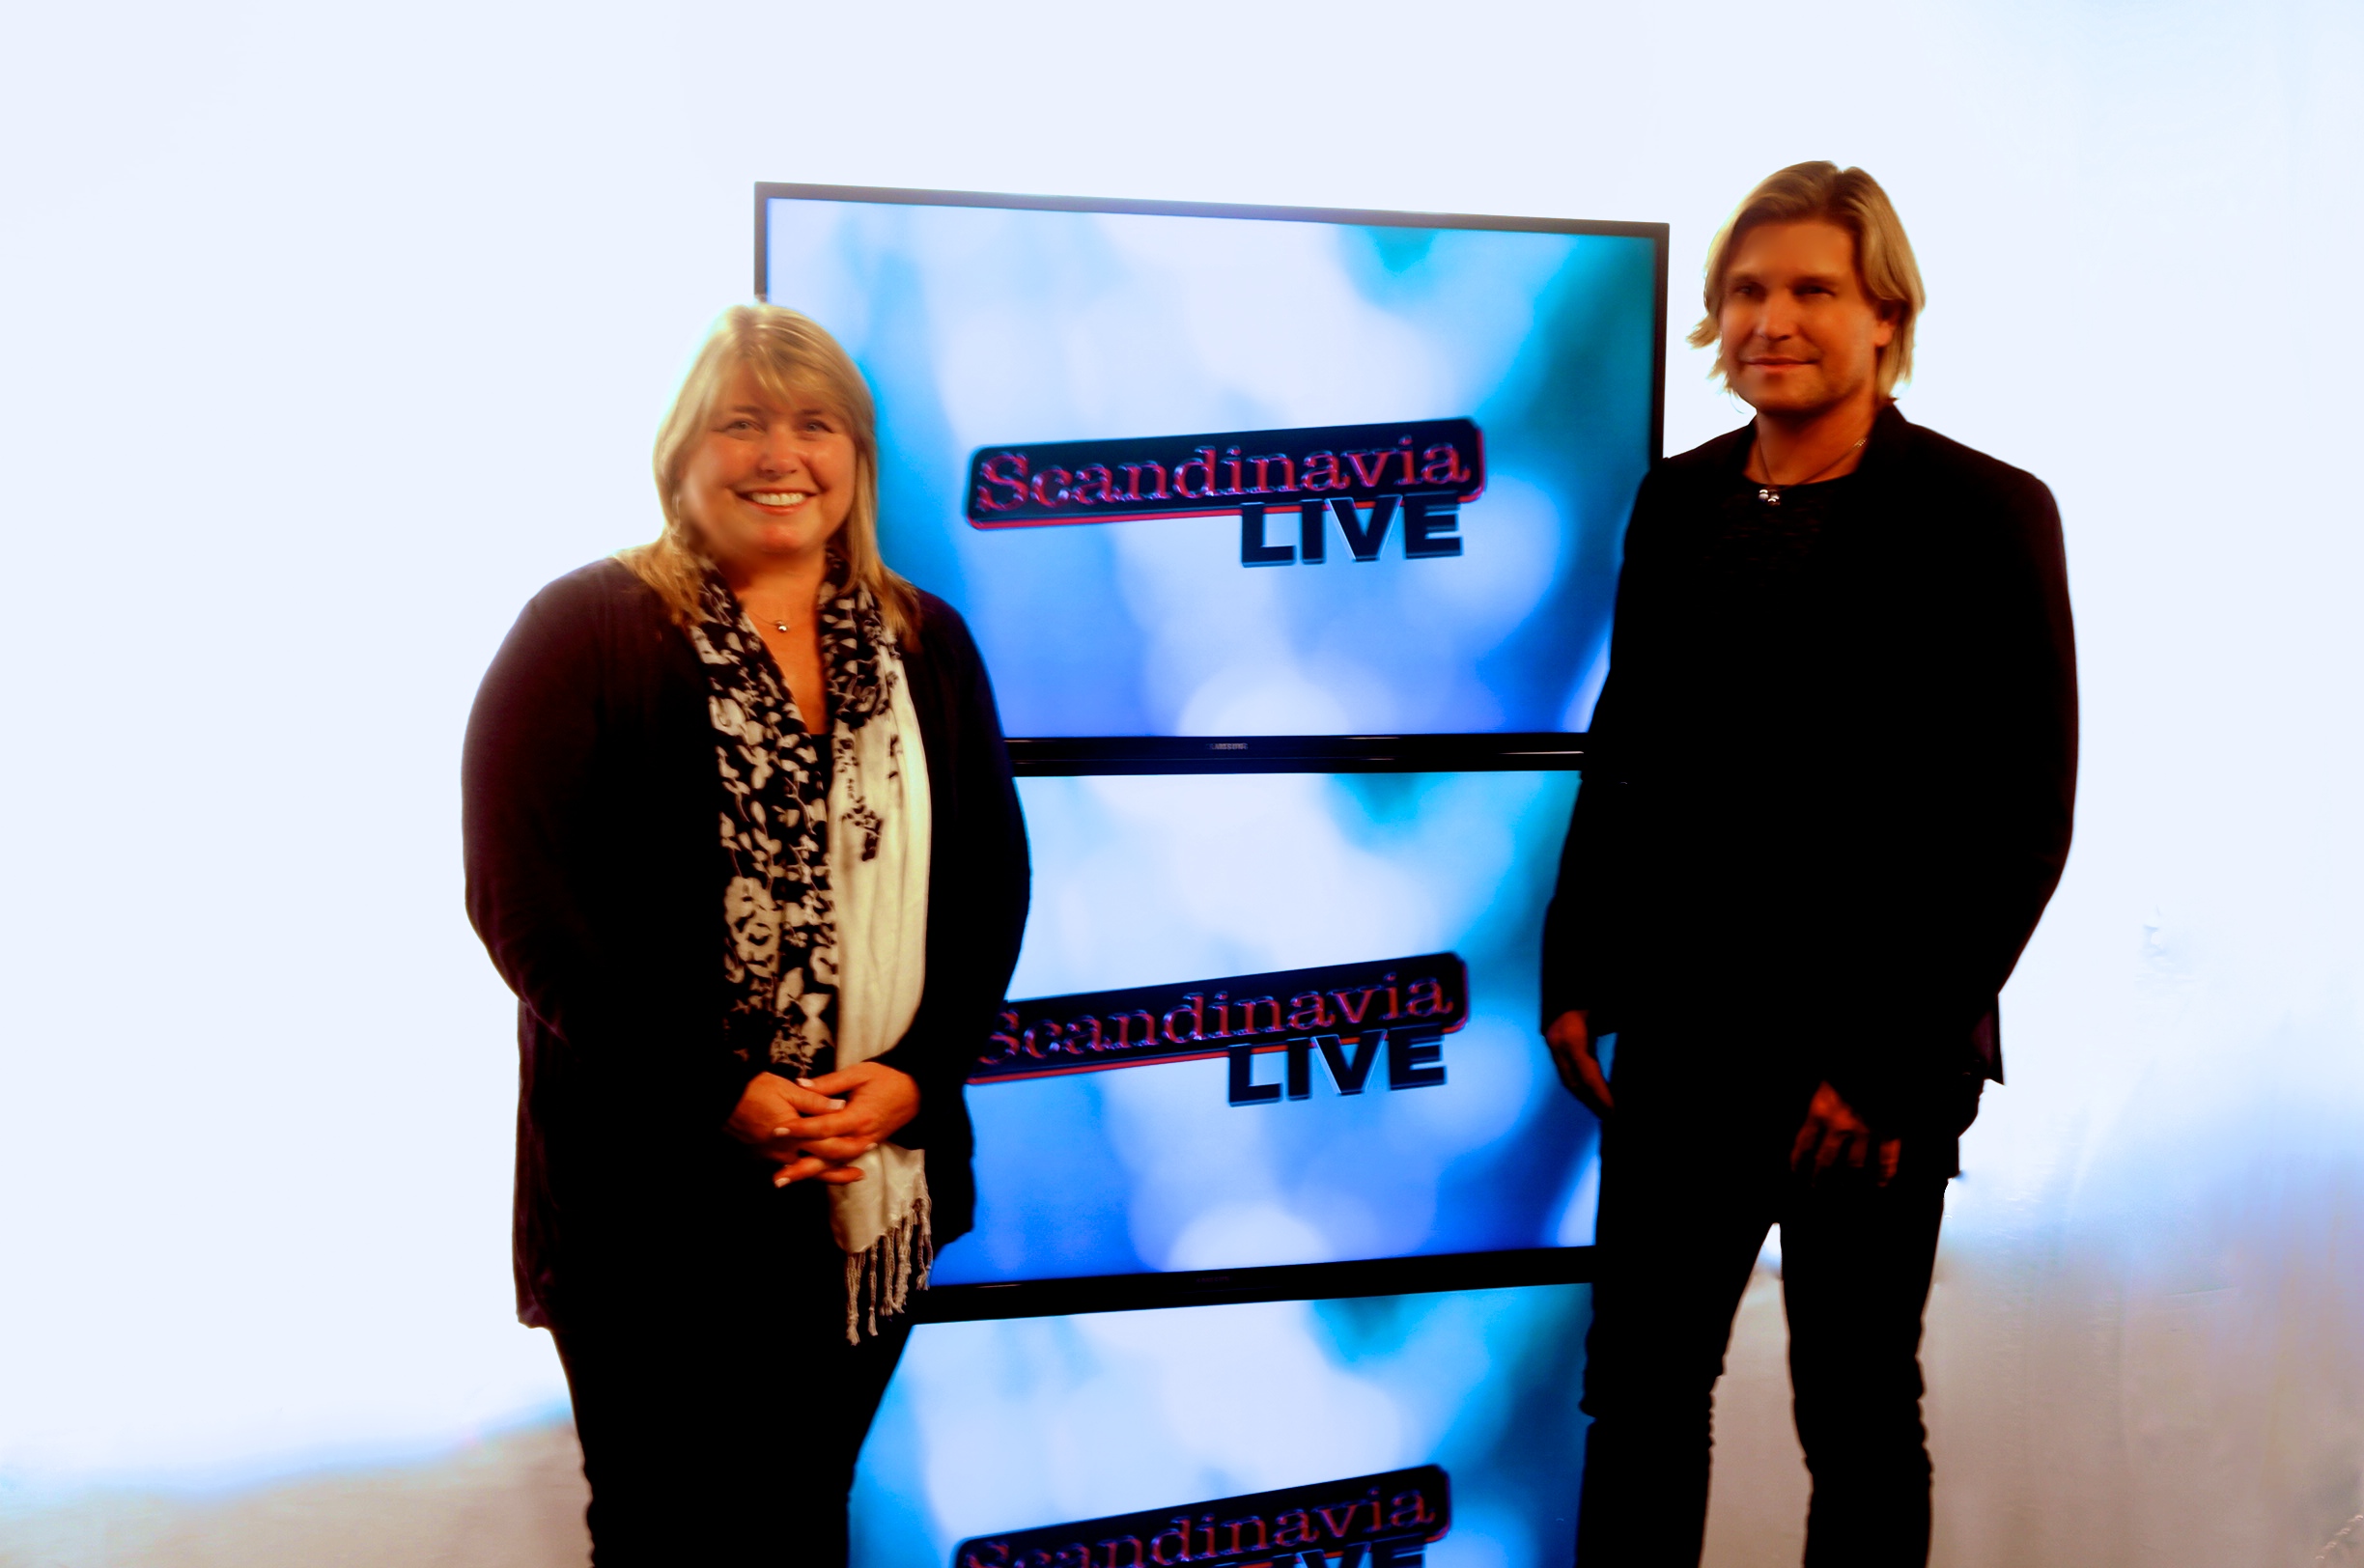 SCANDINAVIA LIVE Christian TV TALK Program aired on primetime KANAL10-NORGE, KANAL10-SVERIGE